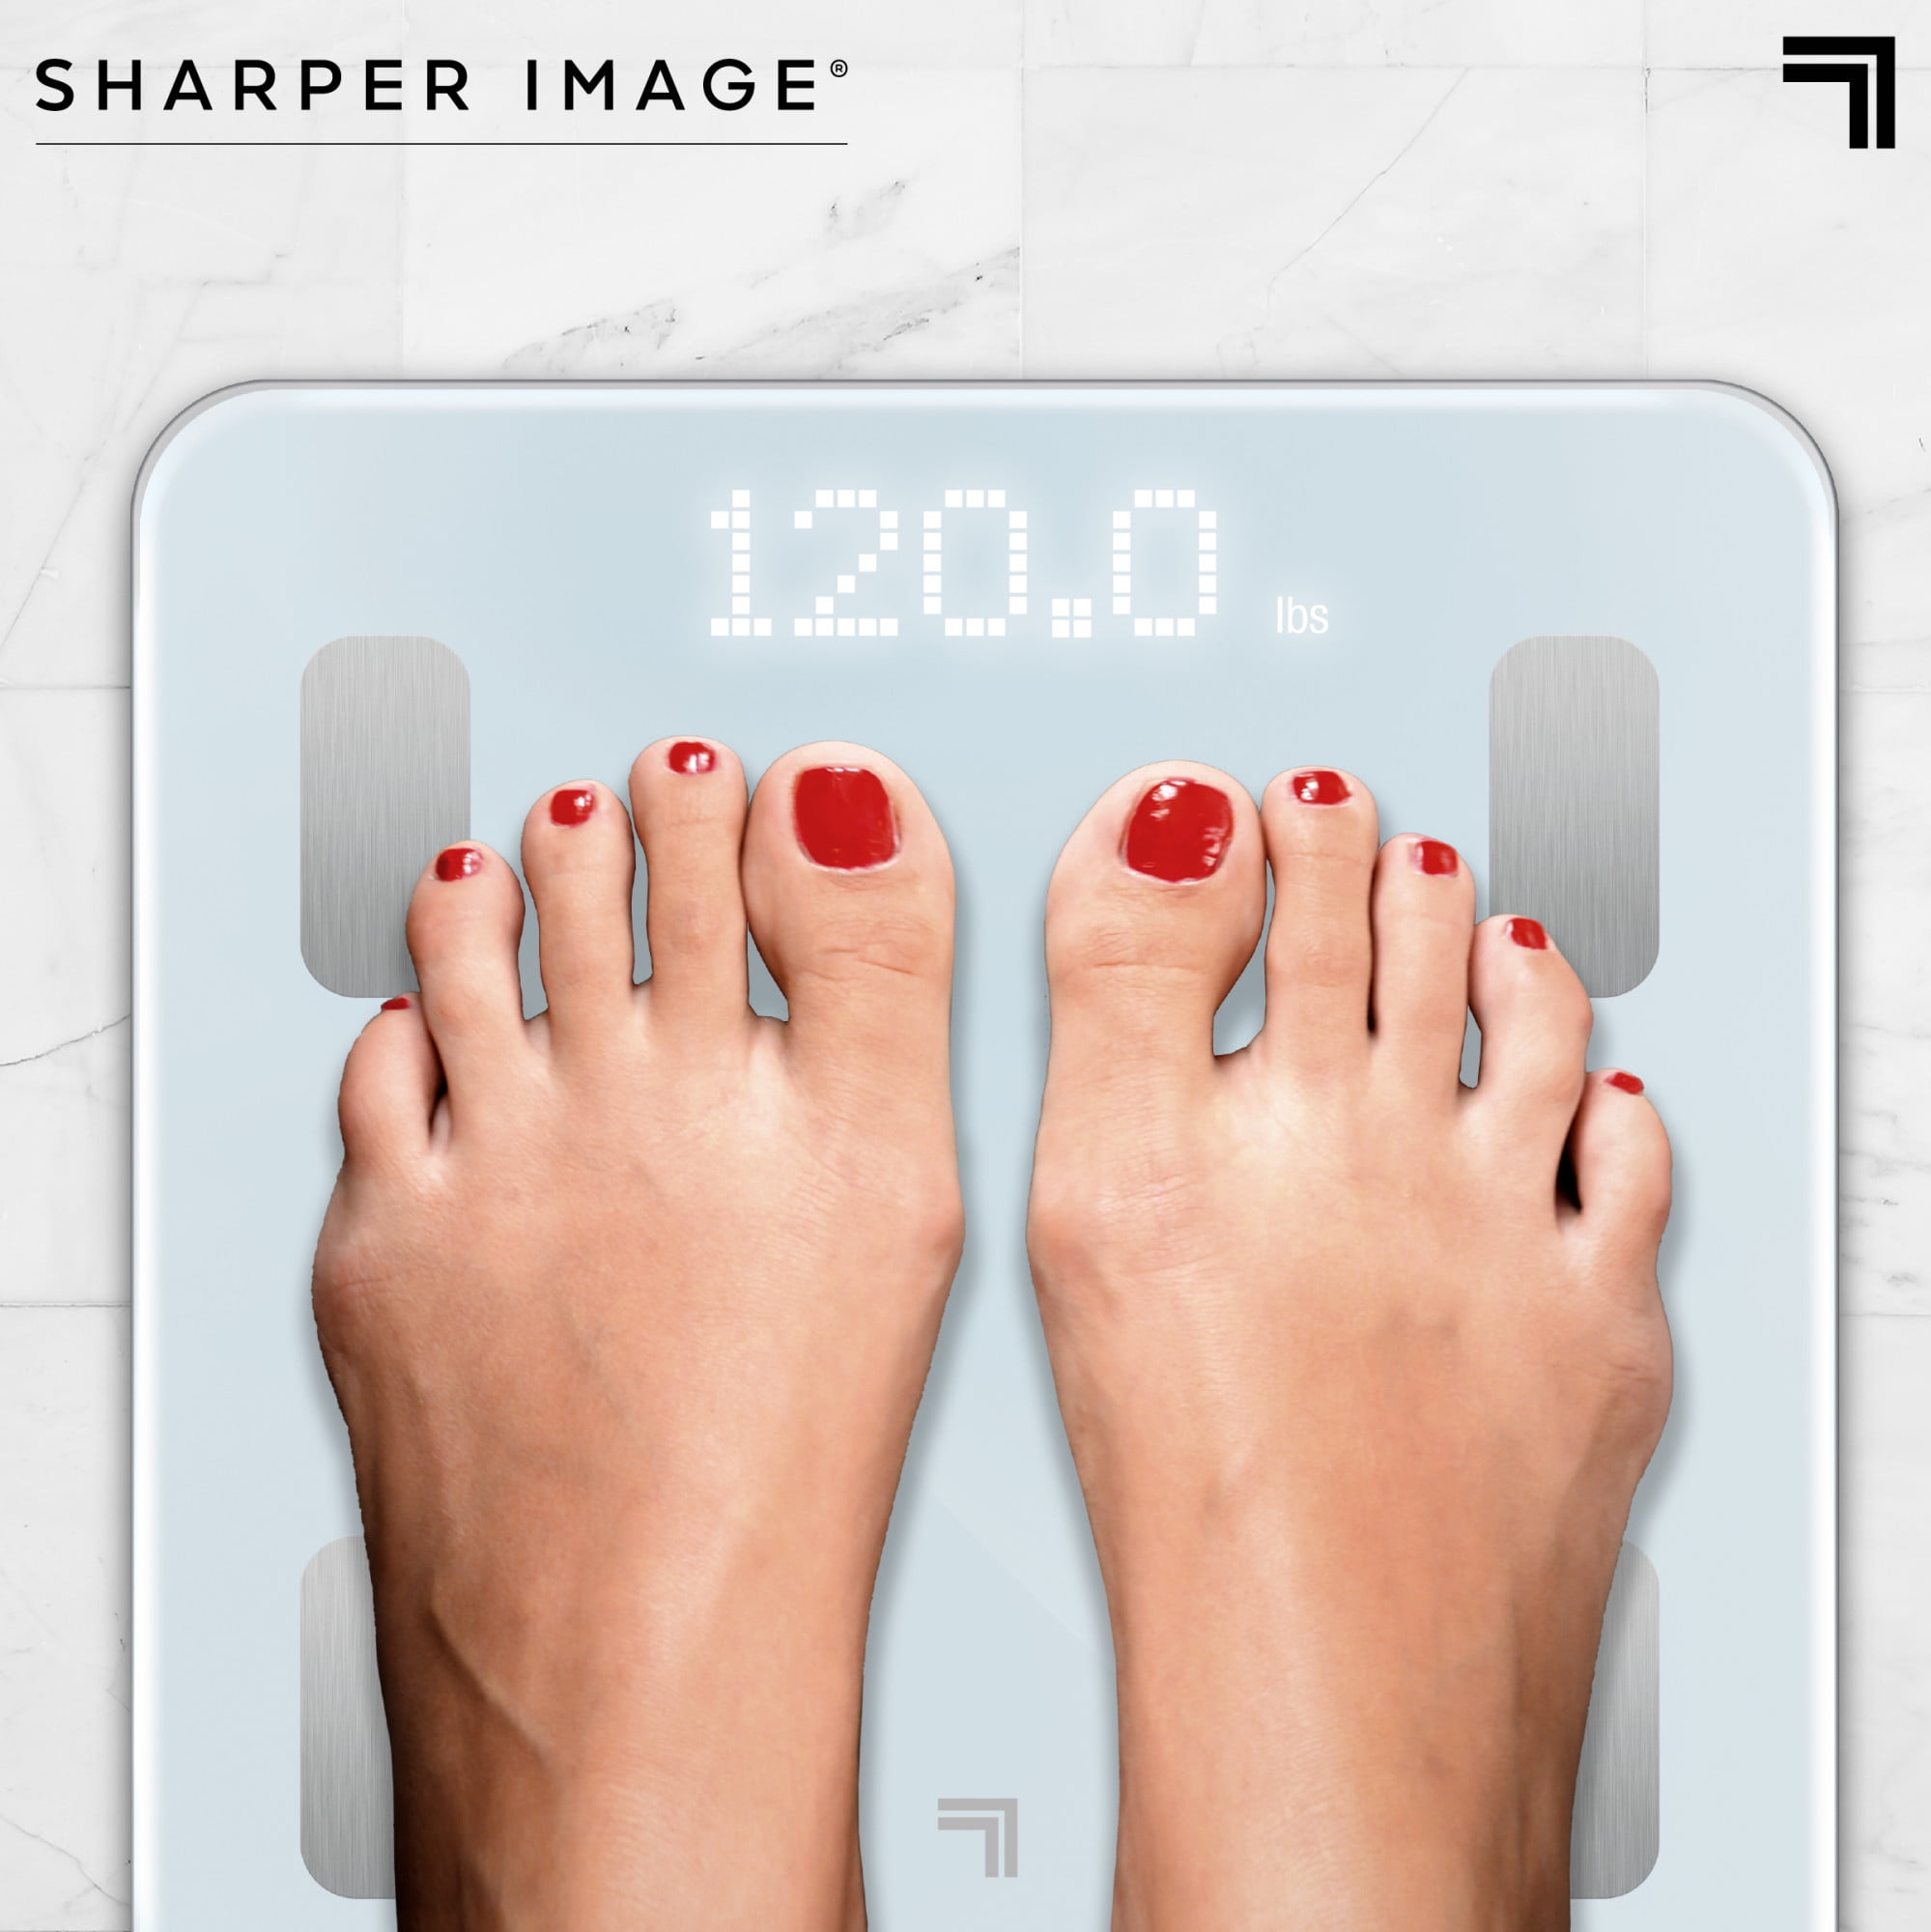 SpaStudio Digital Scale by Sharper Image @